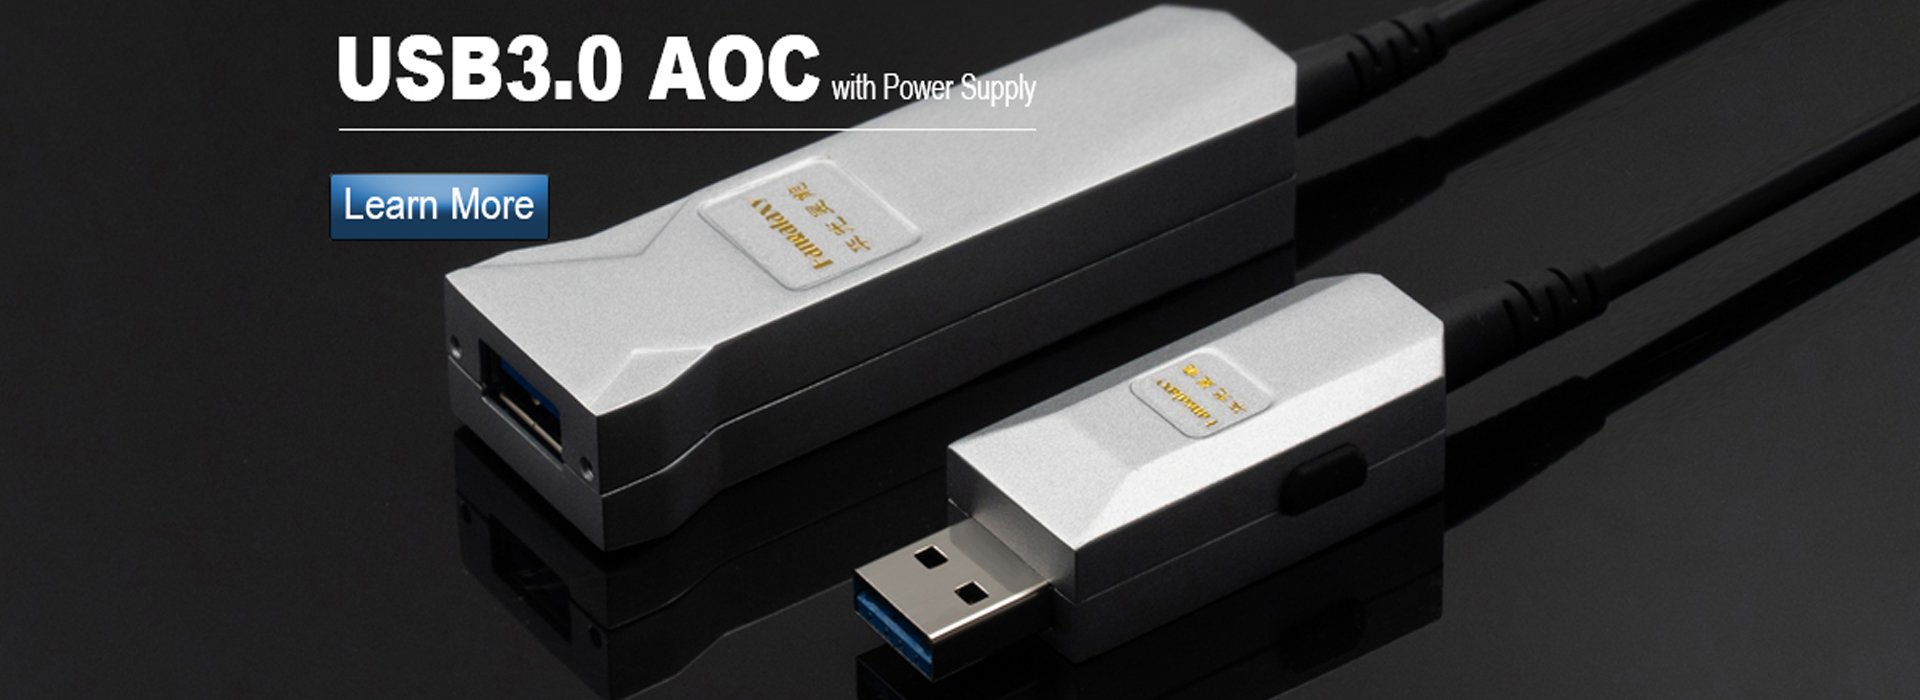 Hangalaxy USB3.0 AOC